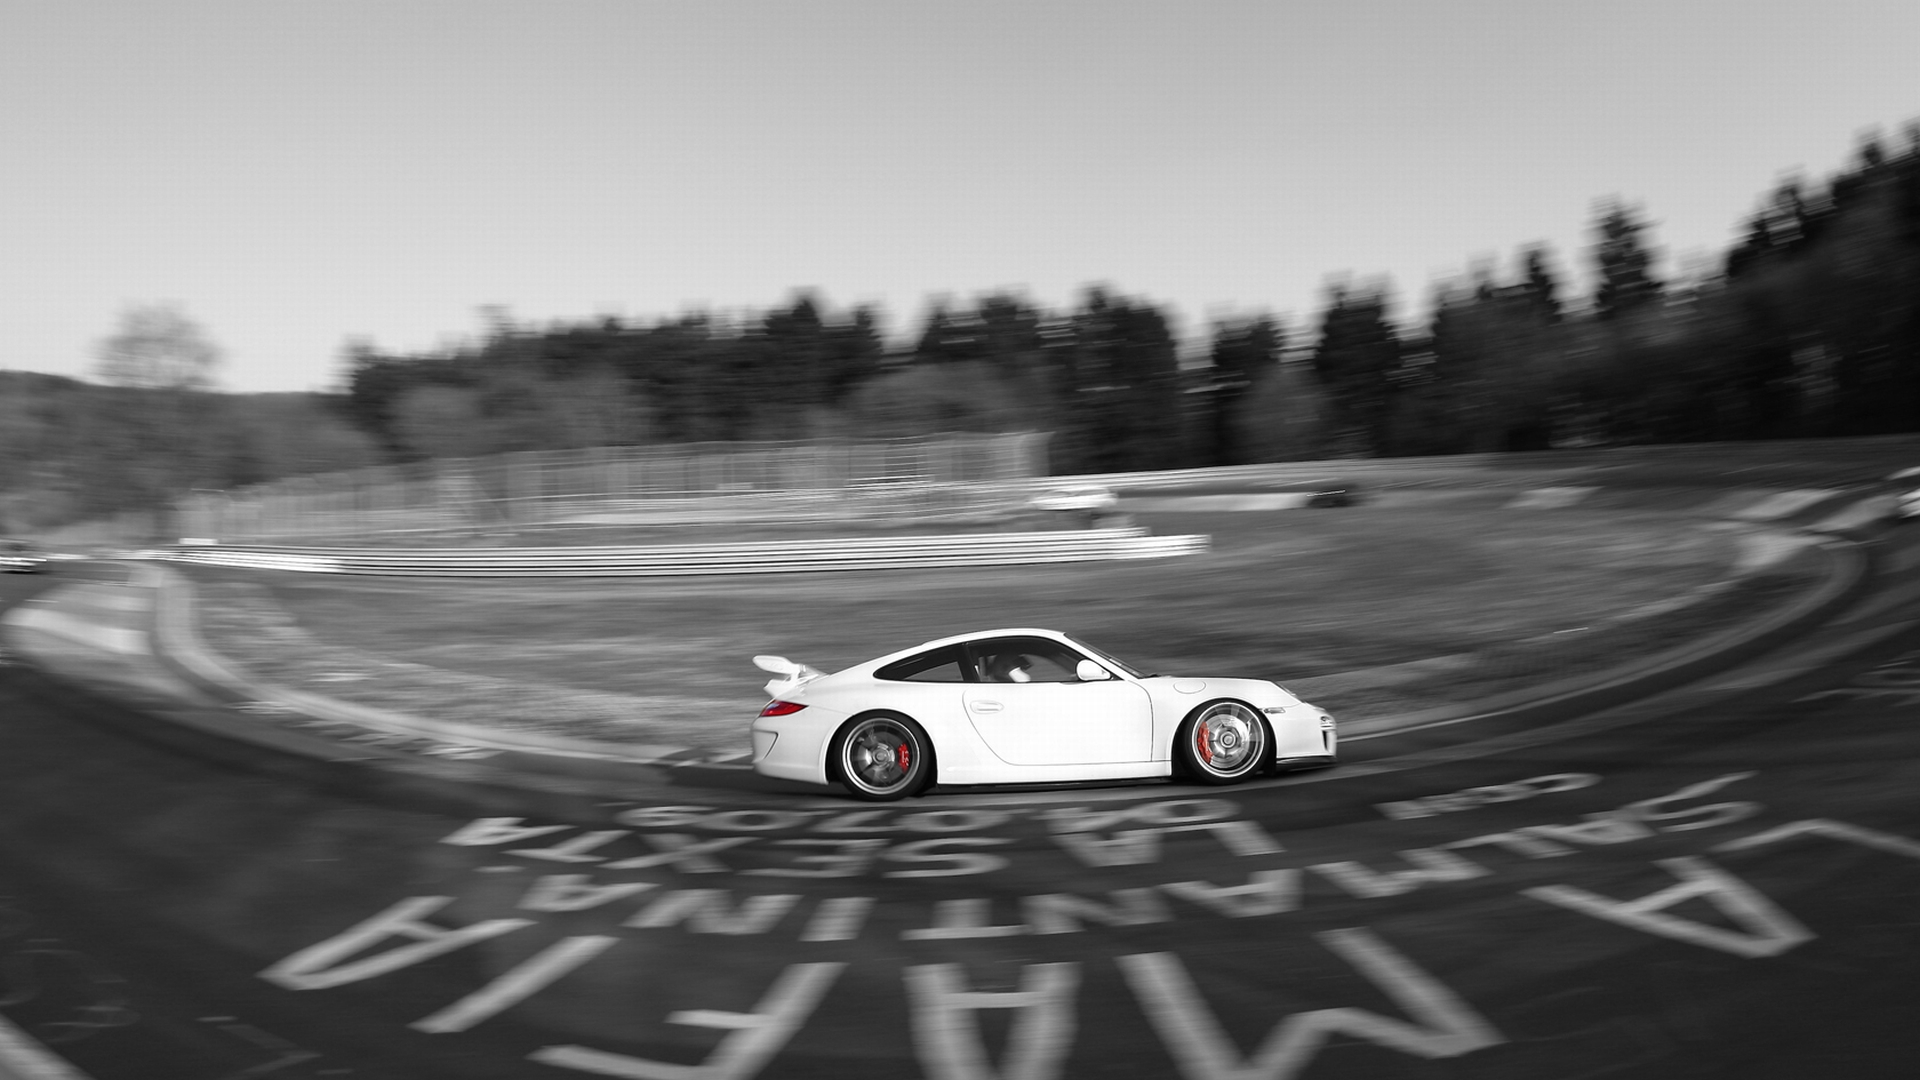 A sleek white Porsche speeding down a curvy road, exuding power and elegance.